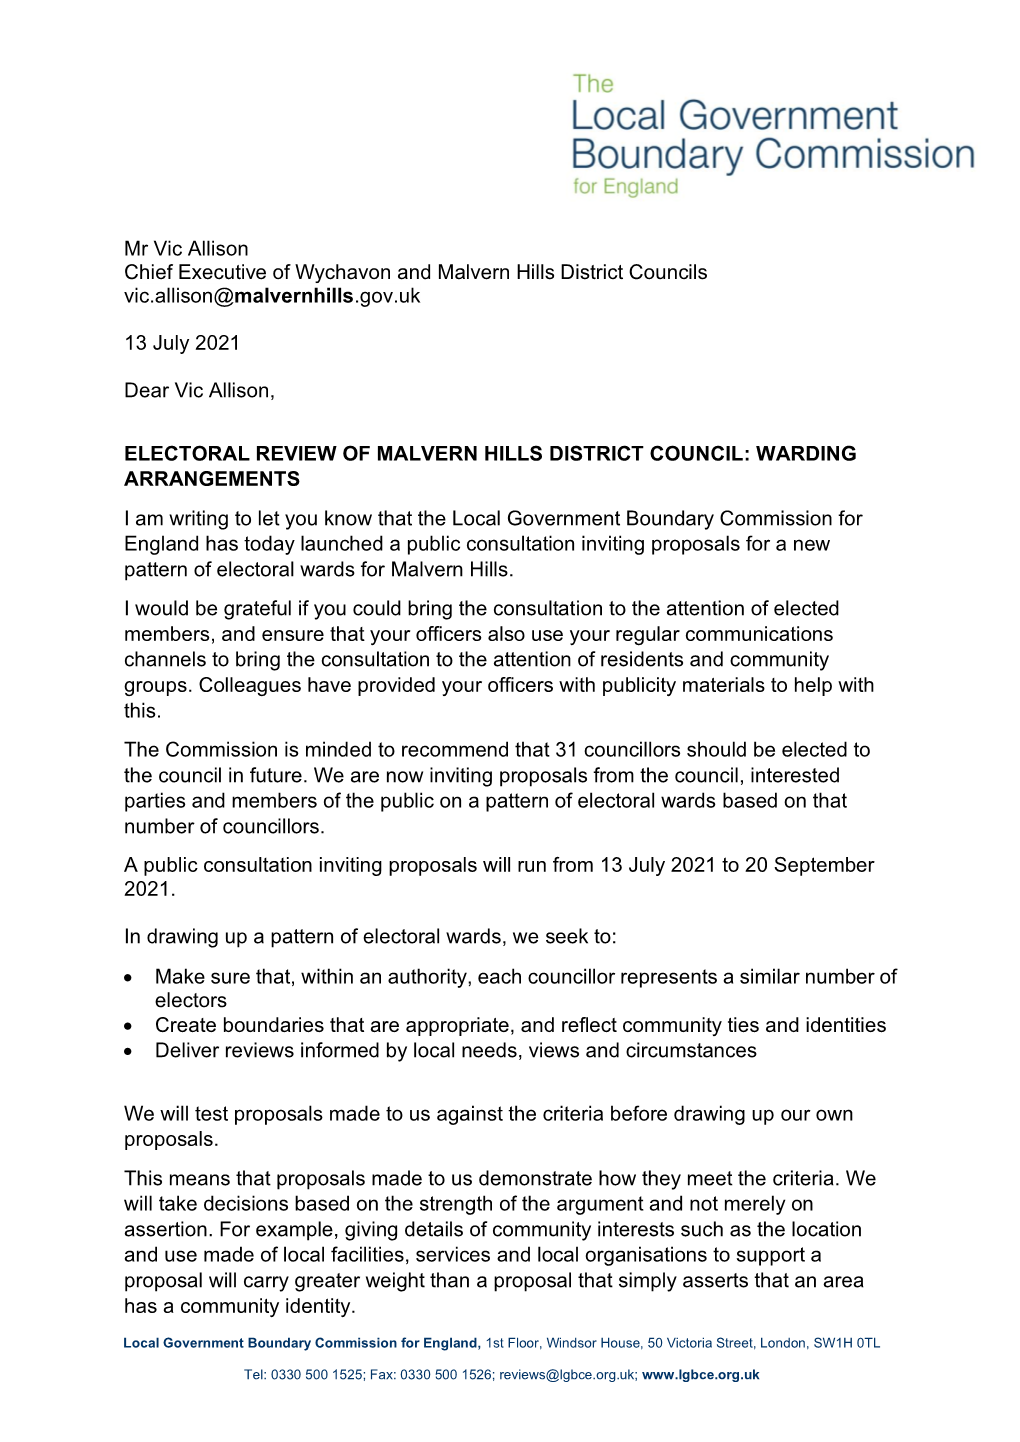 Mr Vic Allison Chief Executive of Wychavon and Malvern Hills District Councils Vic.Allison@Malvernhills.Gov.Uk 13 July 2021 Dear